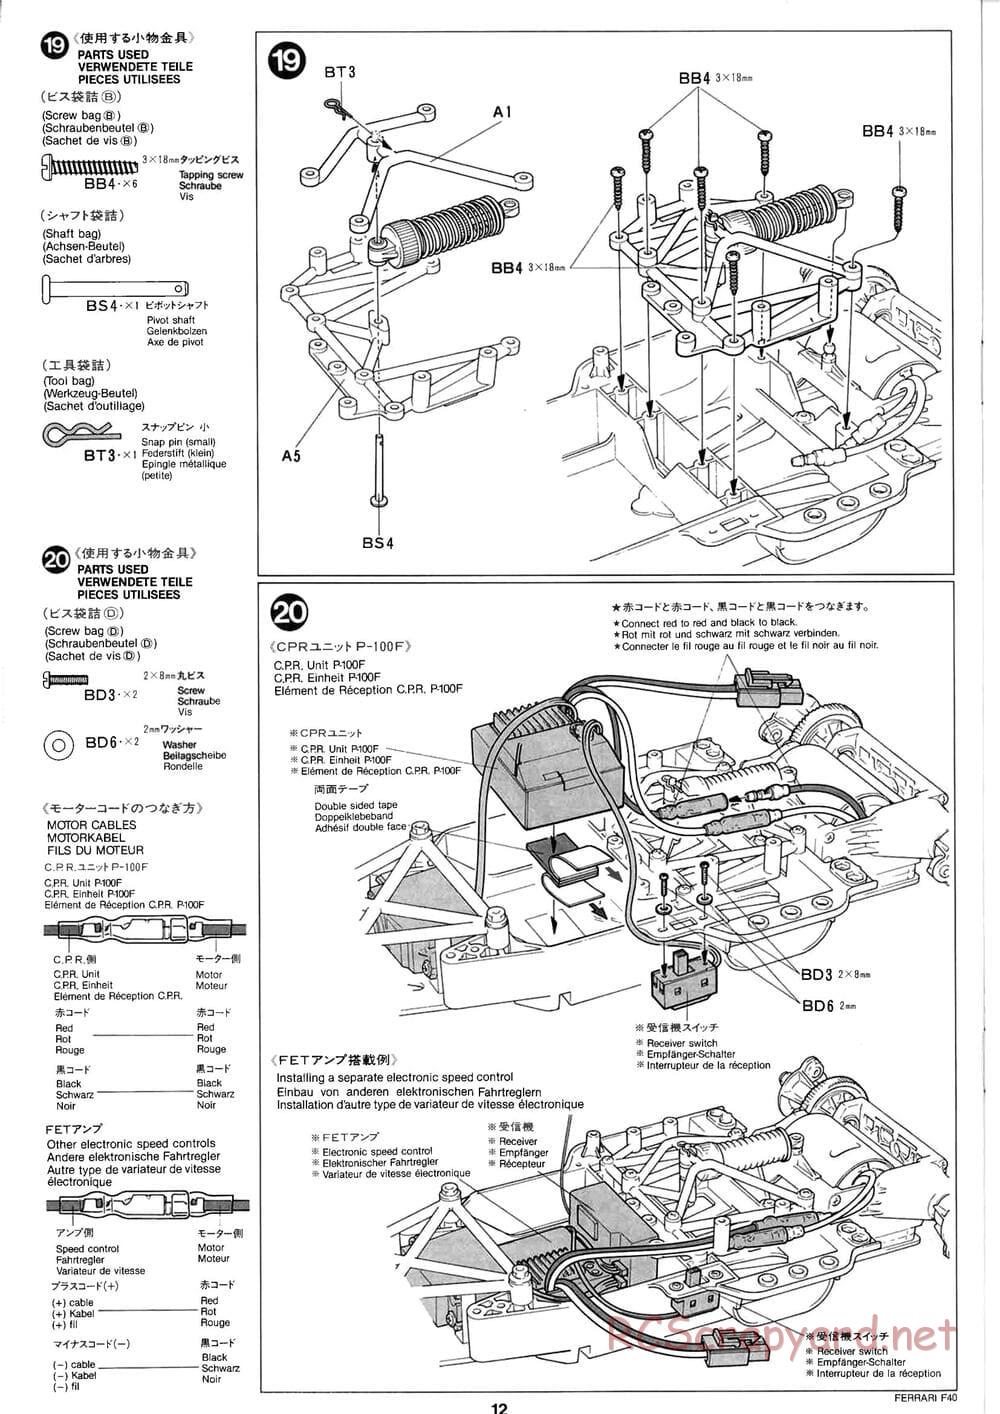 Tamiya - Ferrari F40 - Group-C Chassis - Manual - Page 12